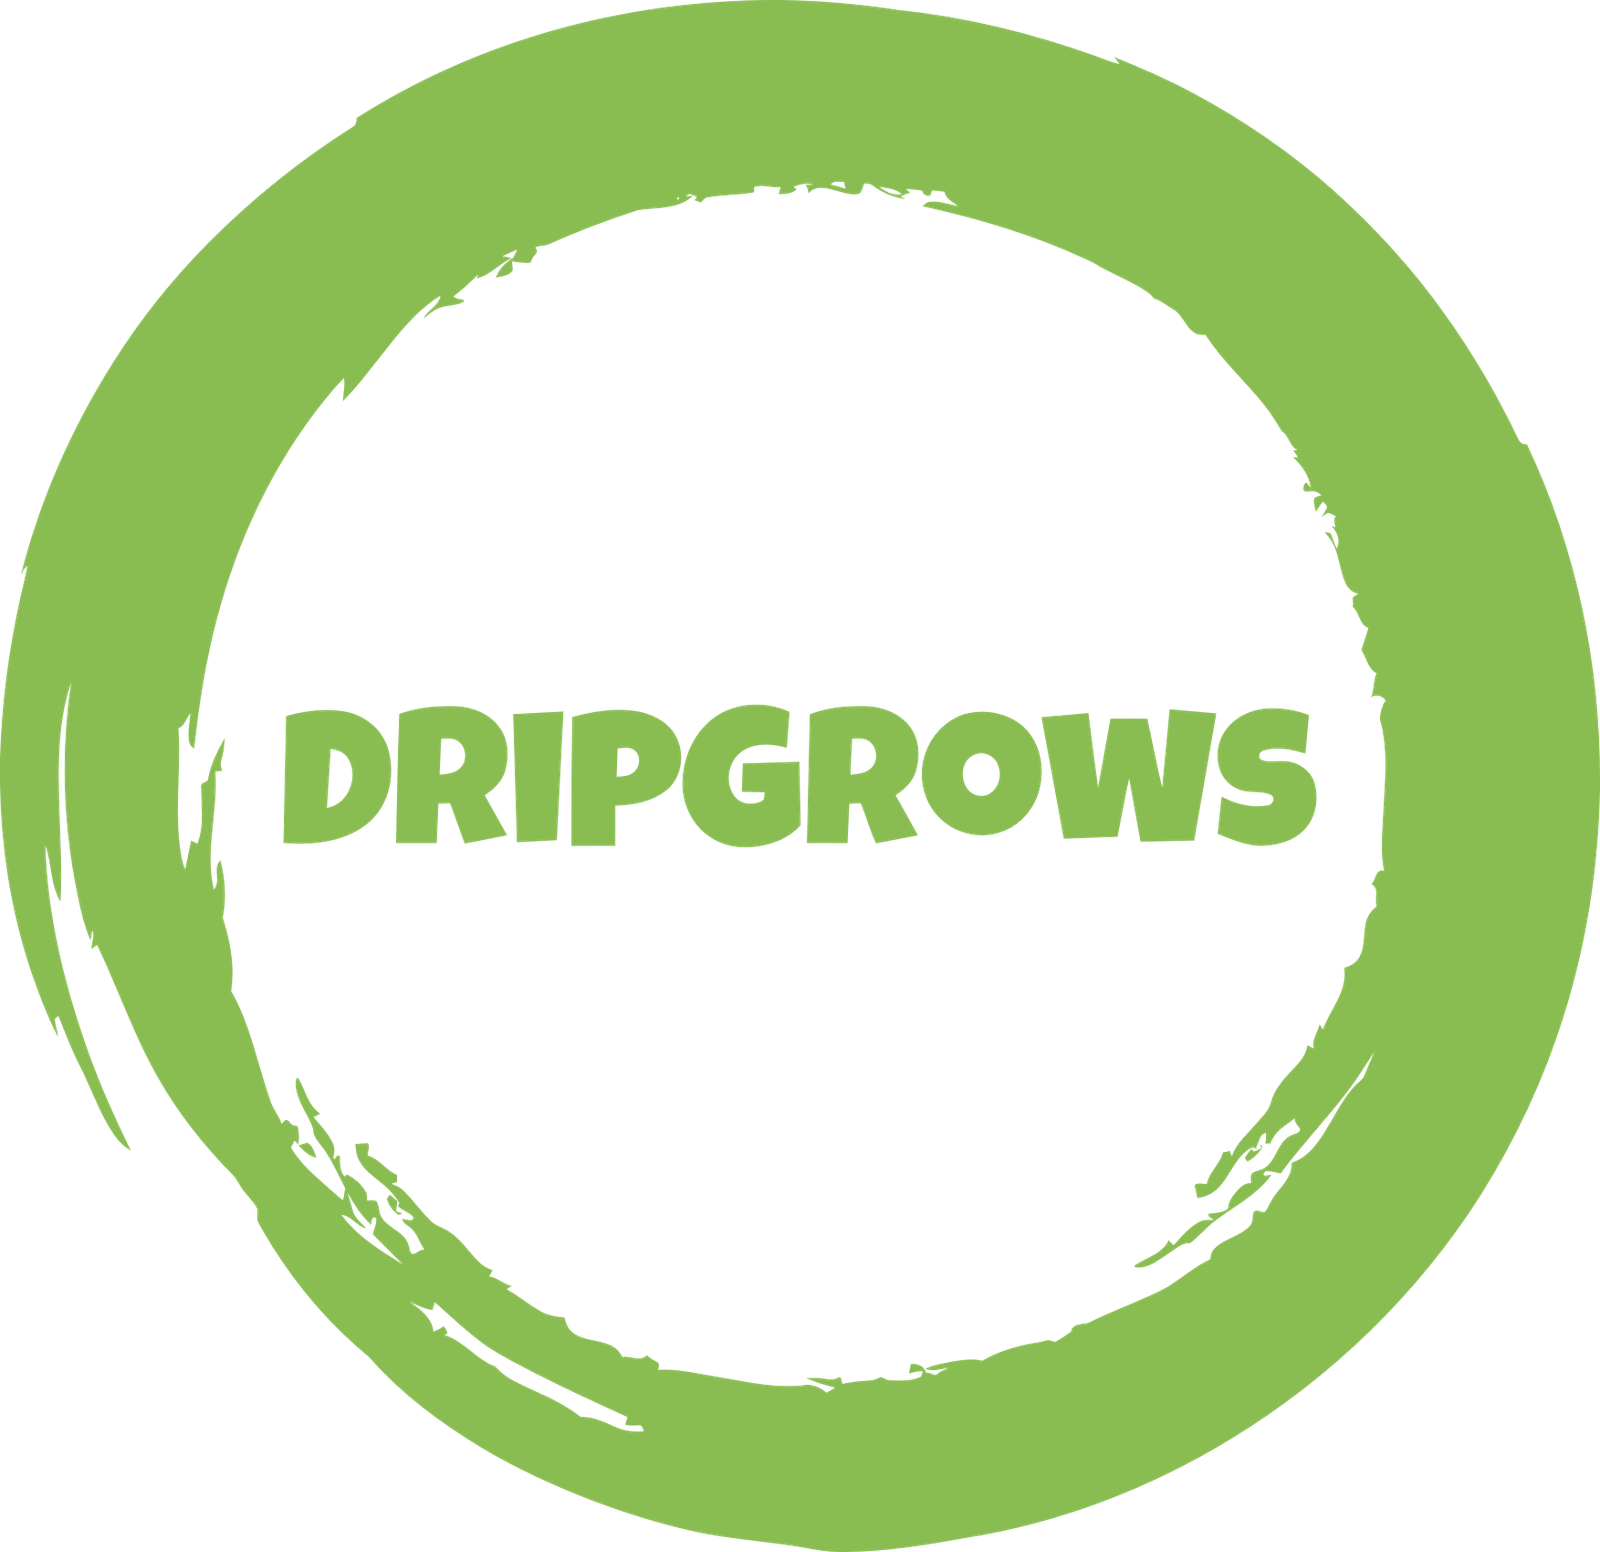 DripGrows